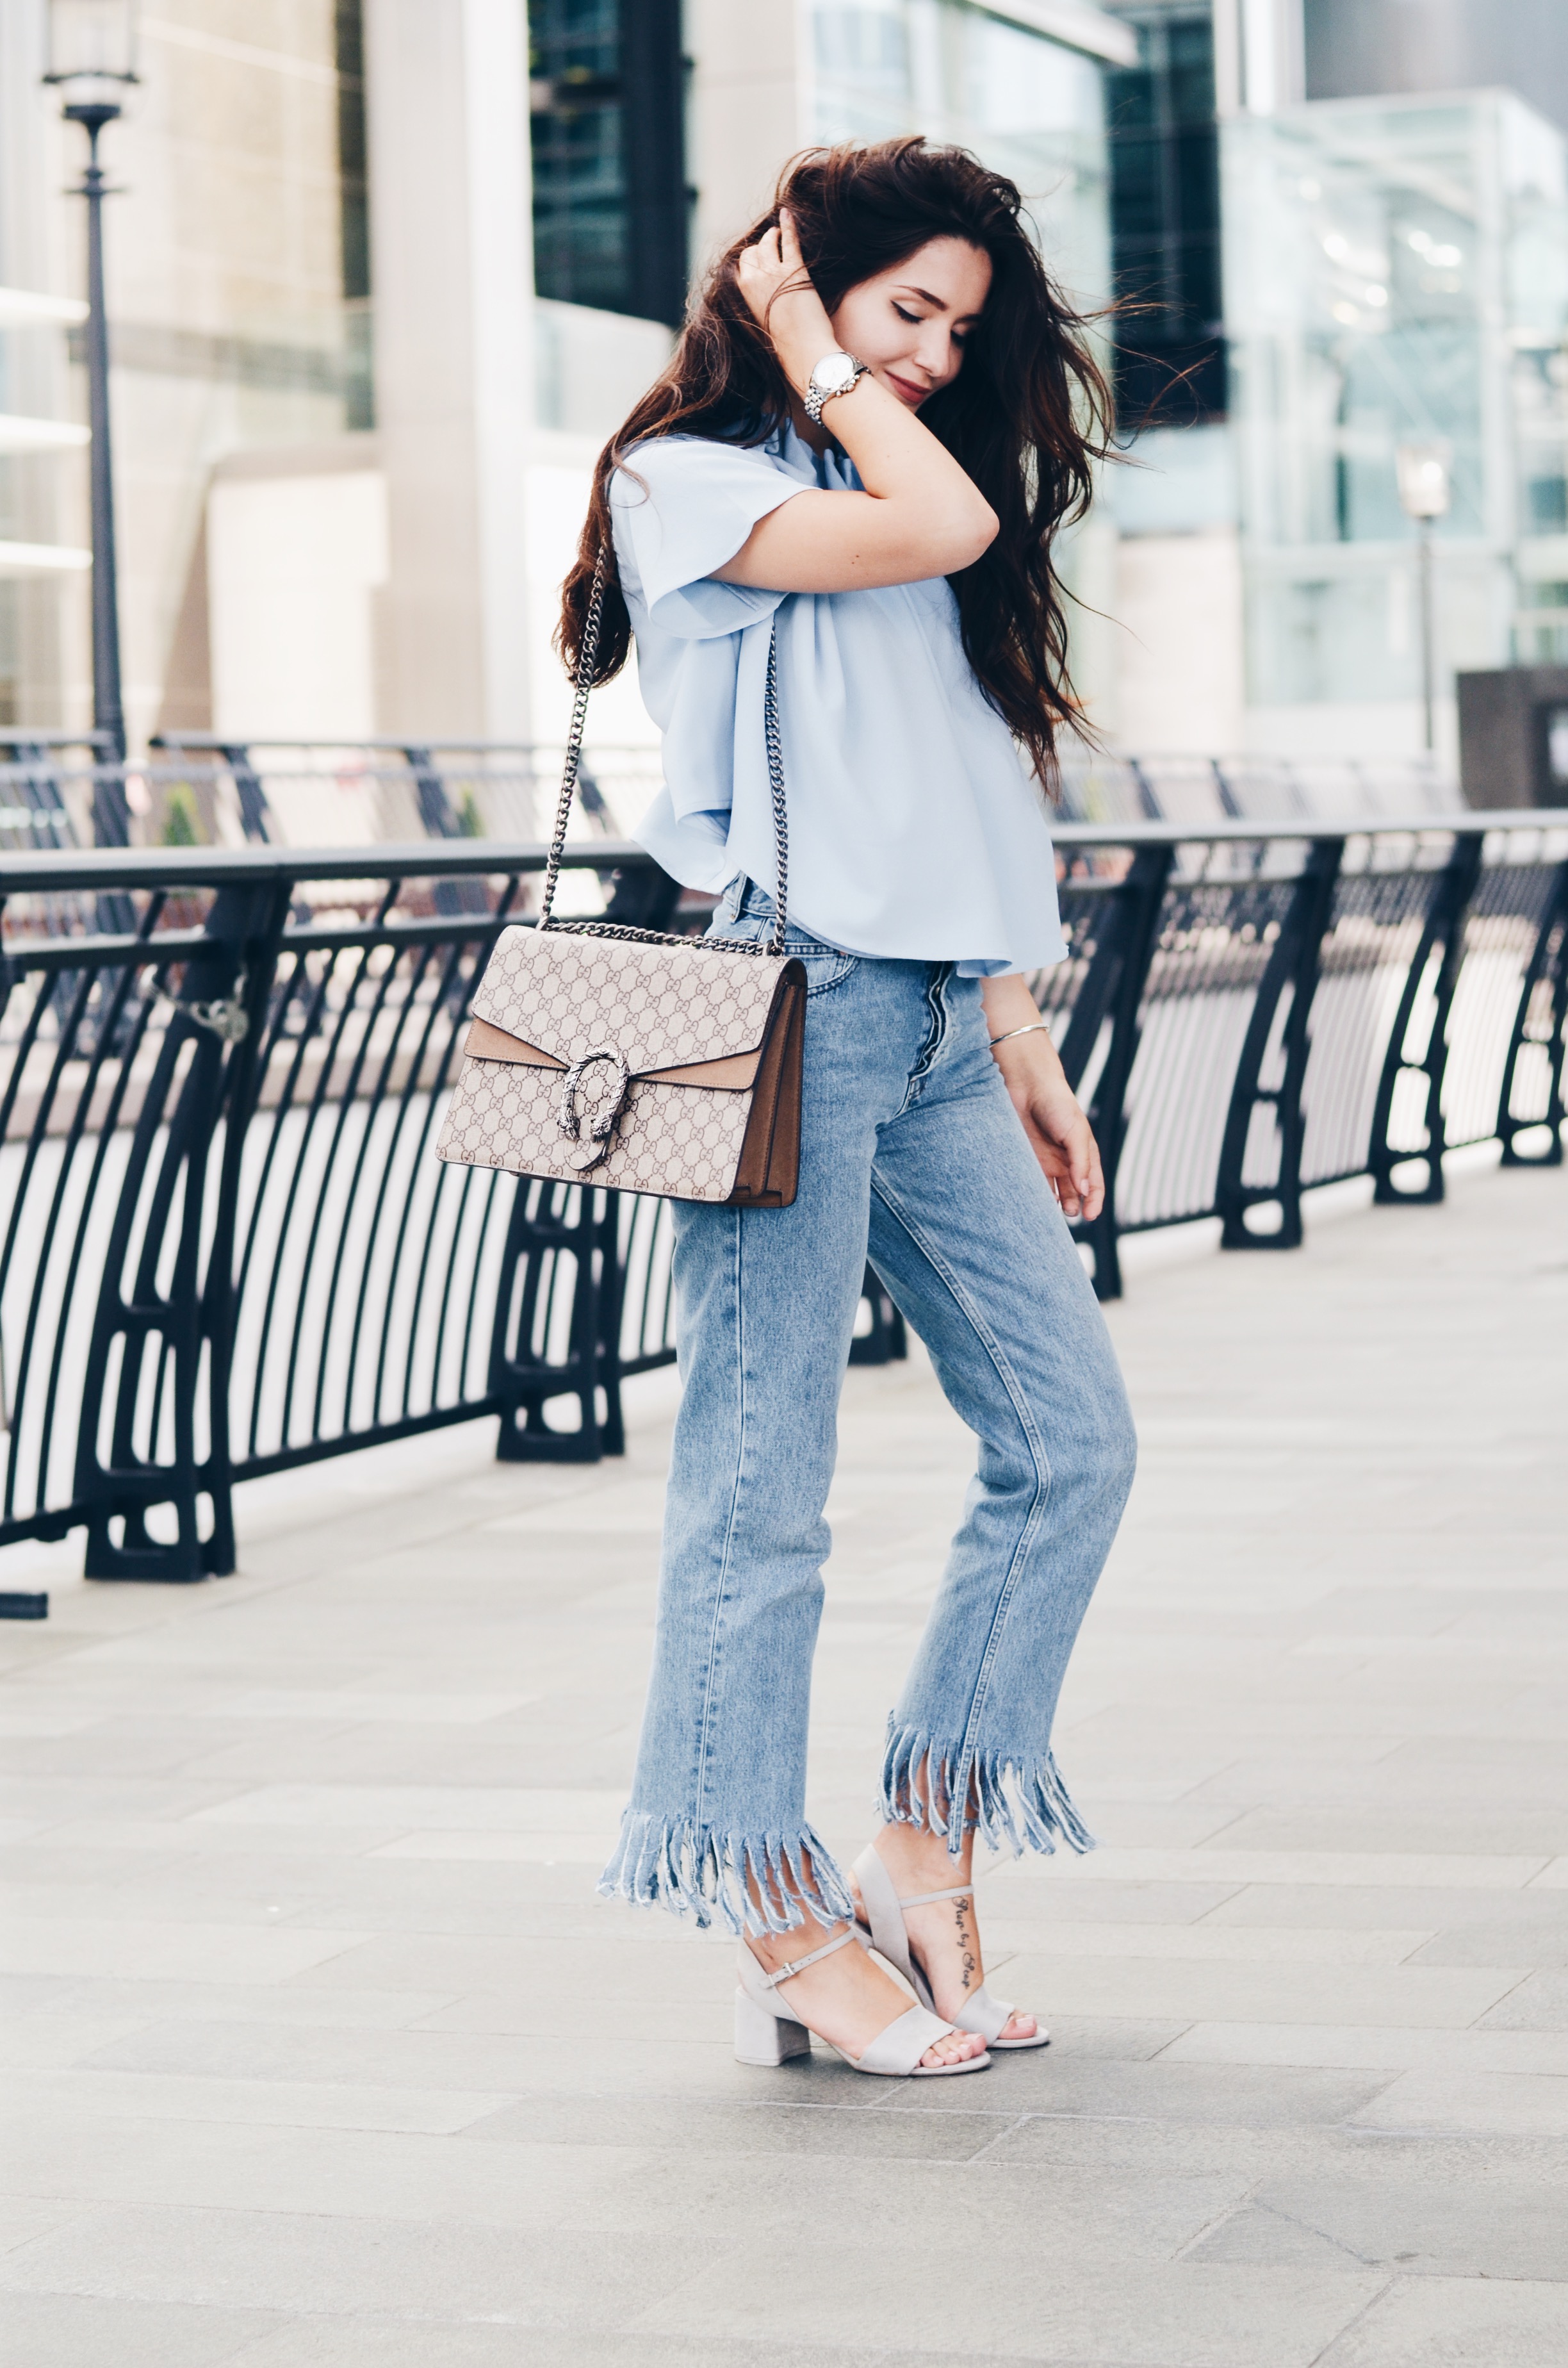 Top: Keepsake | Jeans: ASOS | Heels: ZARA | Bag: Gucci | Watch: Thomas Sabo* | Bracelet: Tiffany